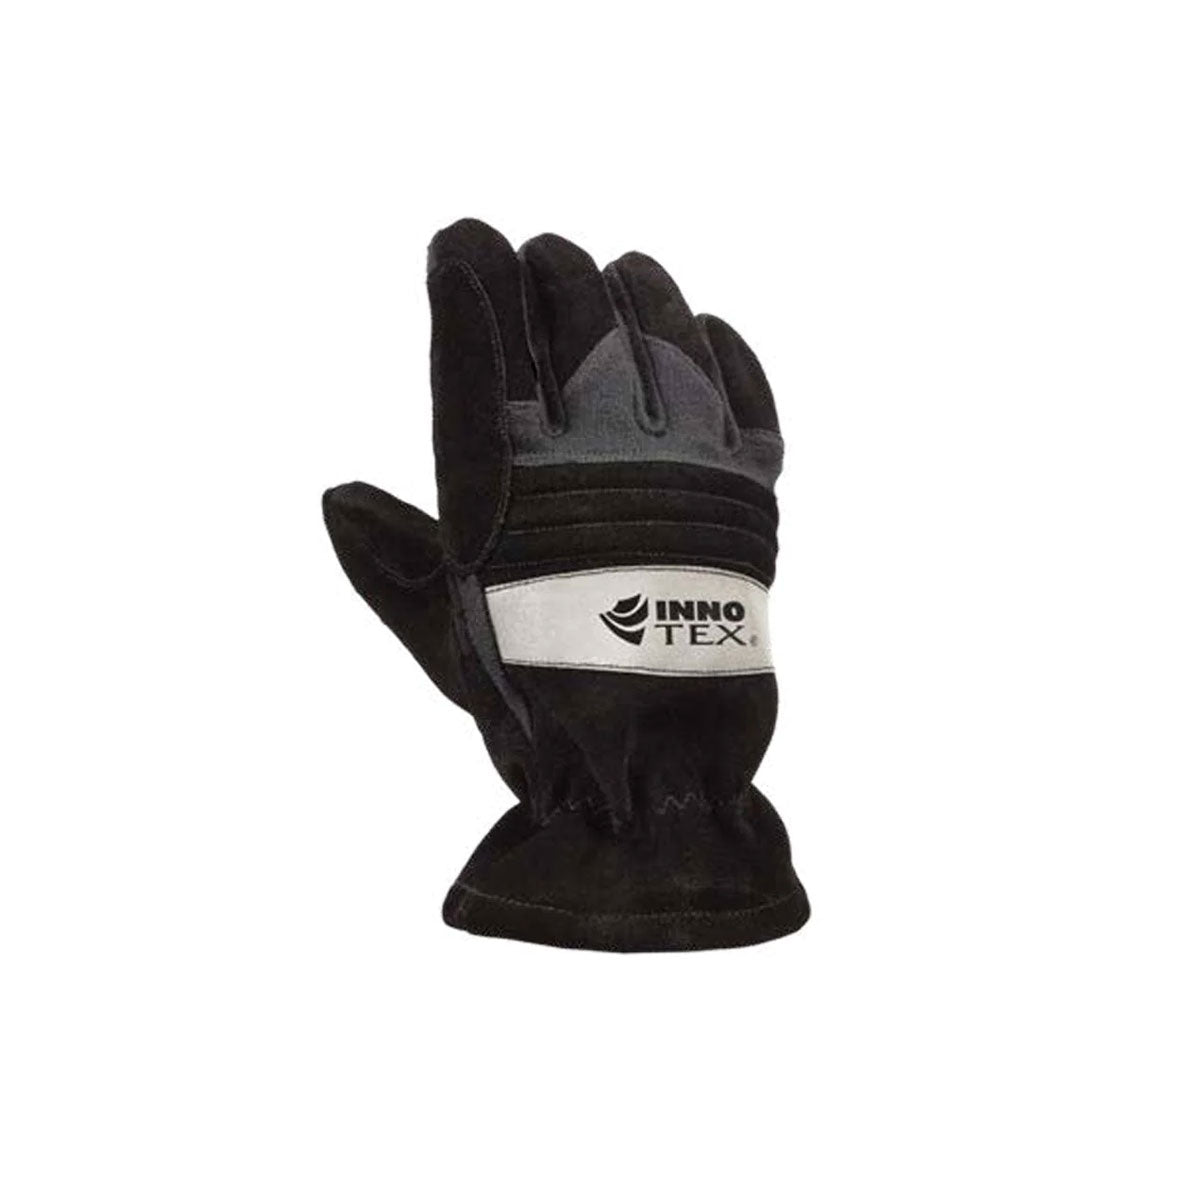 Glove Firefighting Vestamax Black Eversoft Split Cowhide Shell and Kevlar Knit Knuckle Padding Nomex Gauntlet Size Medium